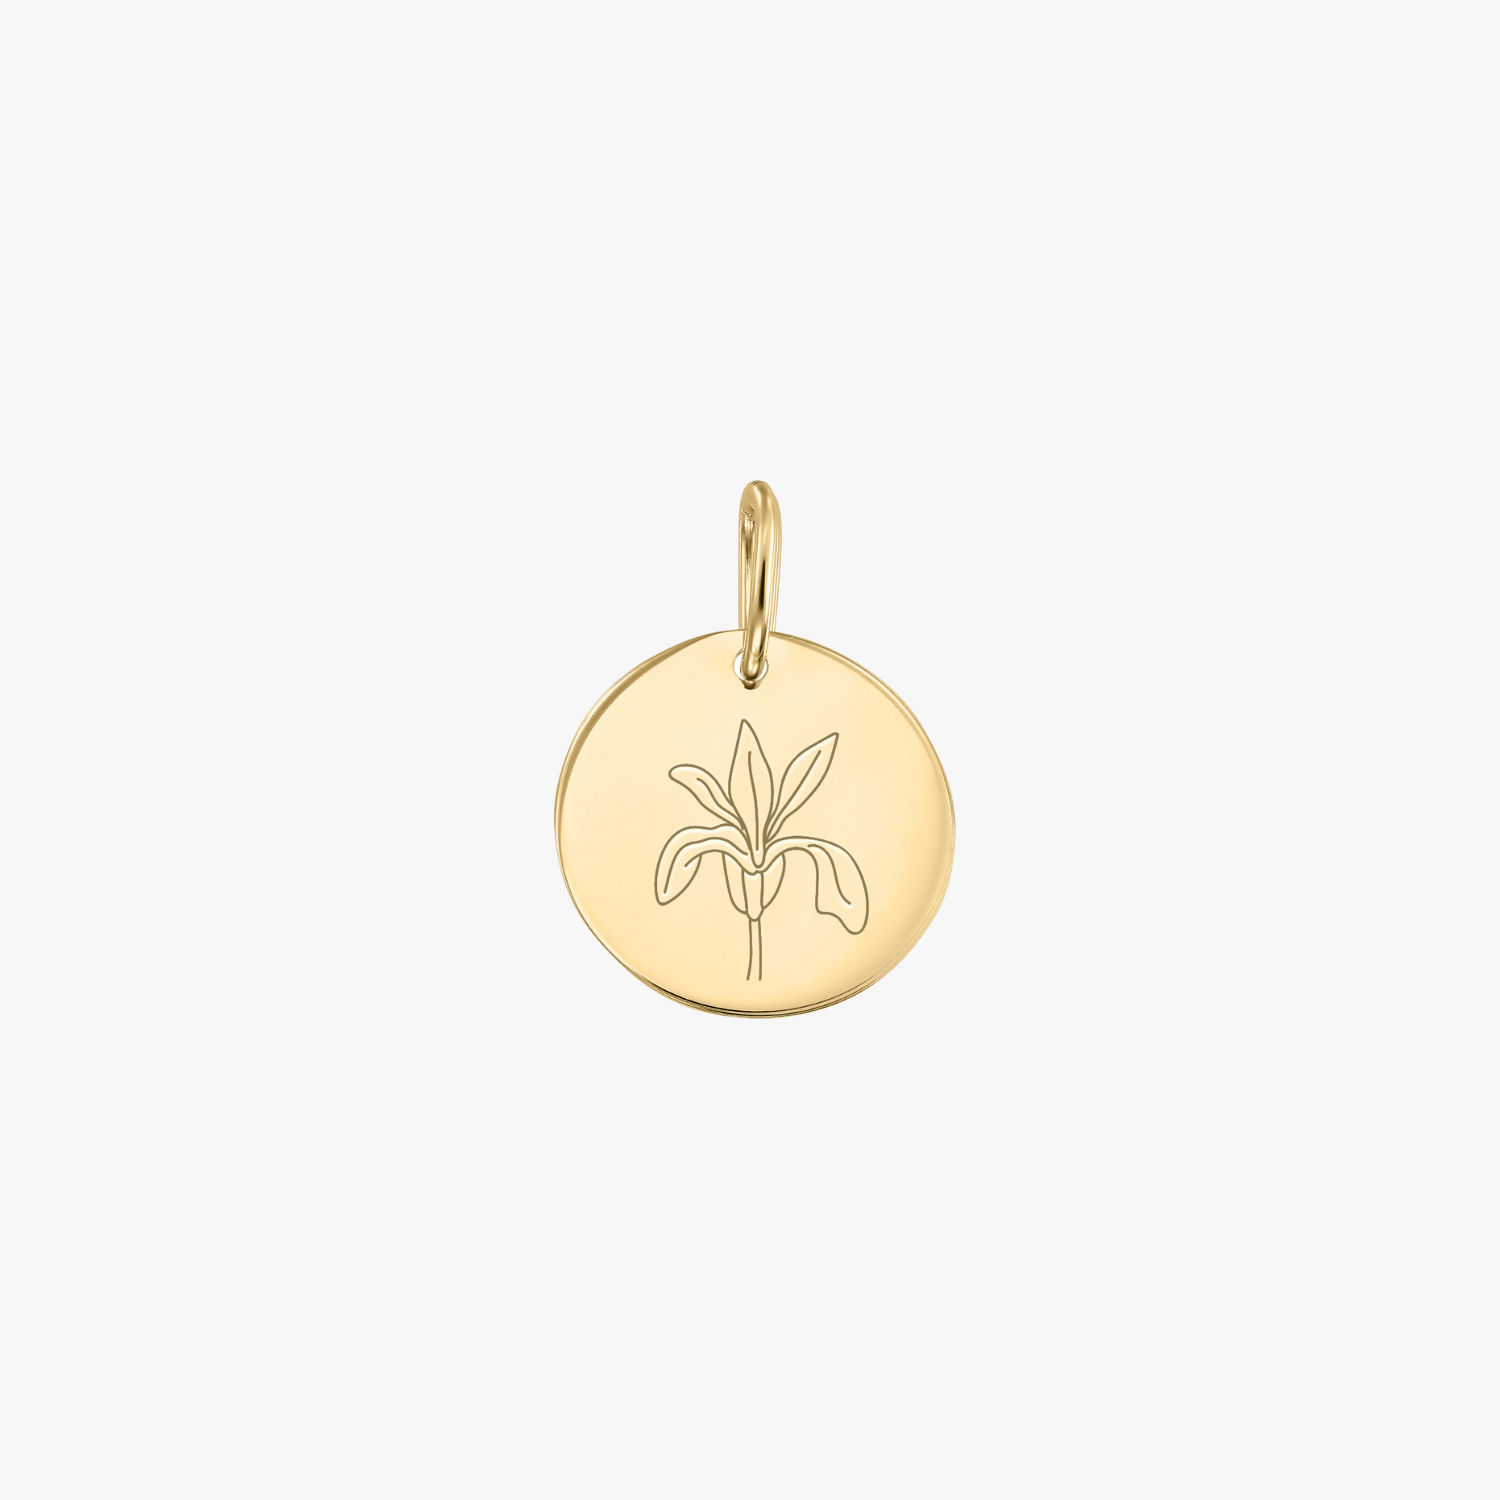 Birth Flower - February Iris gold pendant